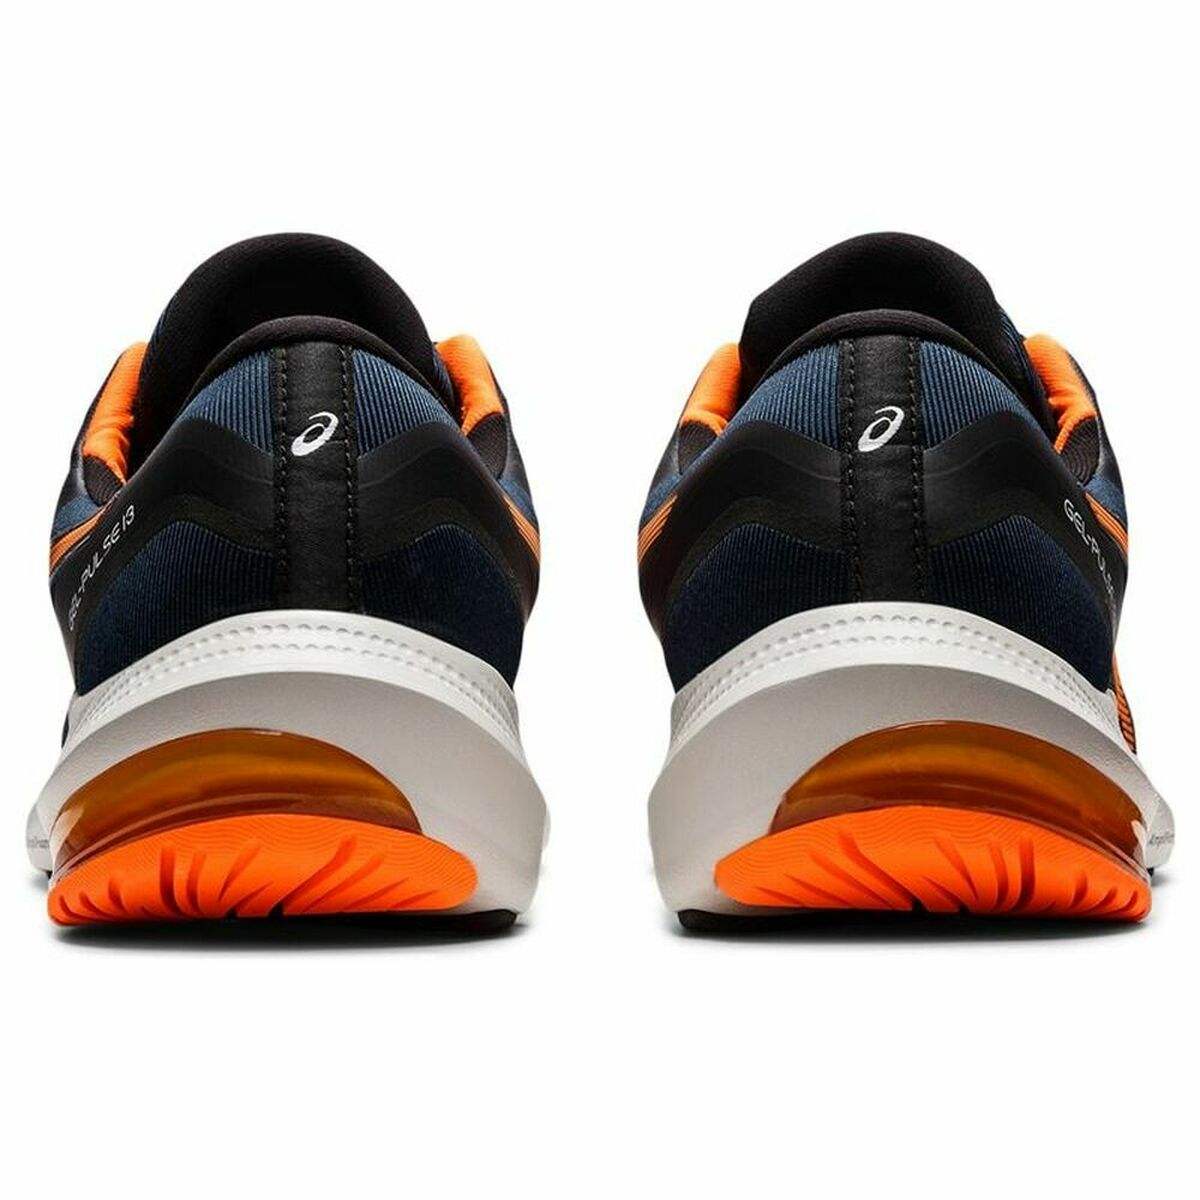 Chaussures de Running pour Adultes Asics Gel-Pulse 13 M - Asics - Jardin D'Eyden - jardindeyden.fr